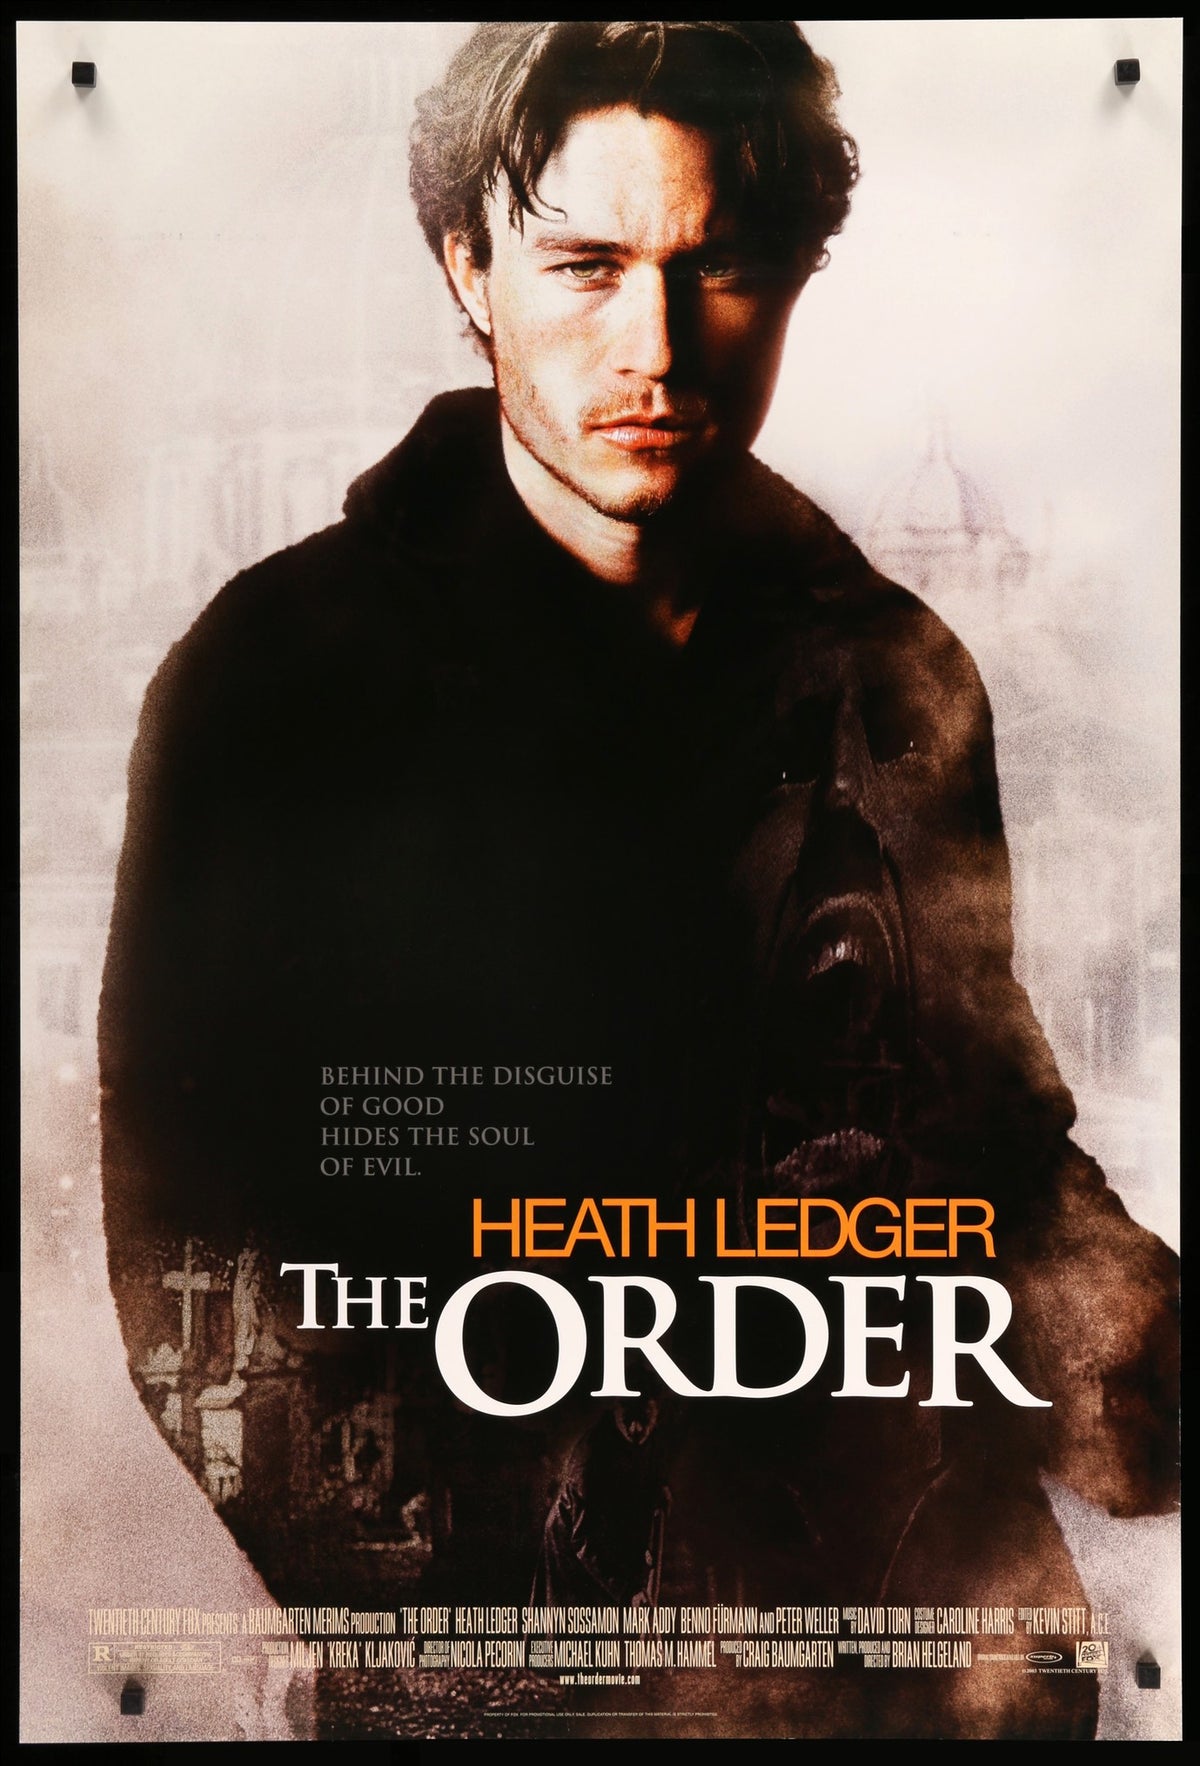 Order (2003) original movie poster for sale at Original Film Art